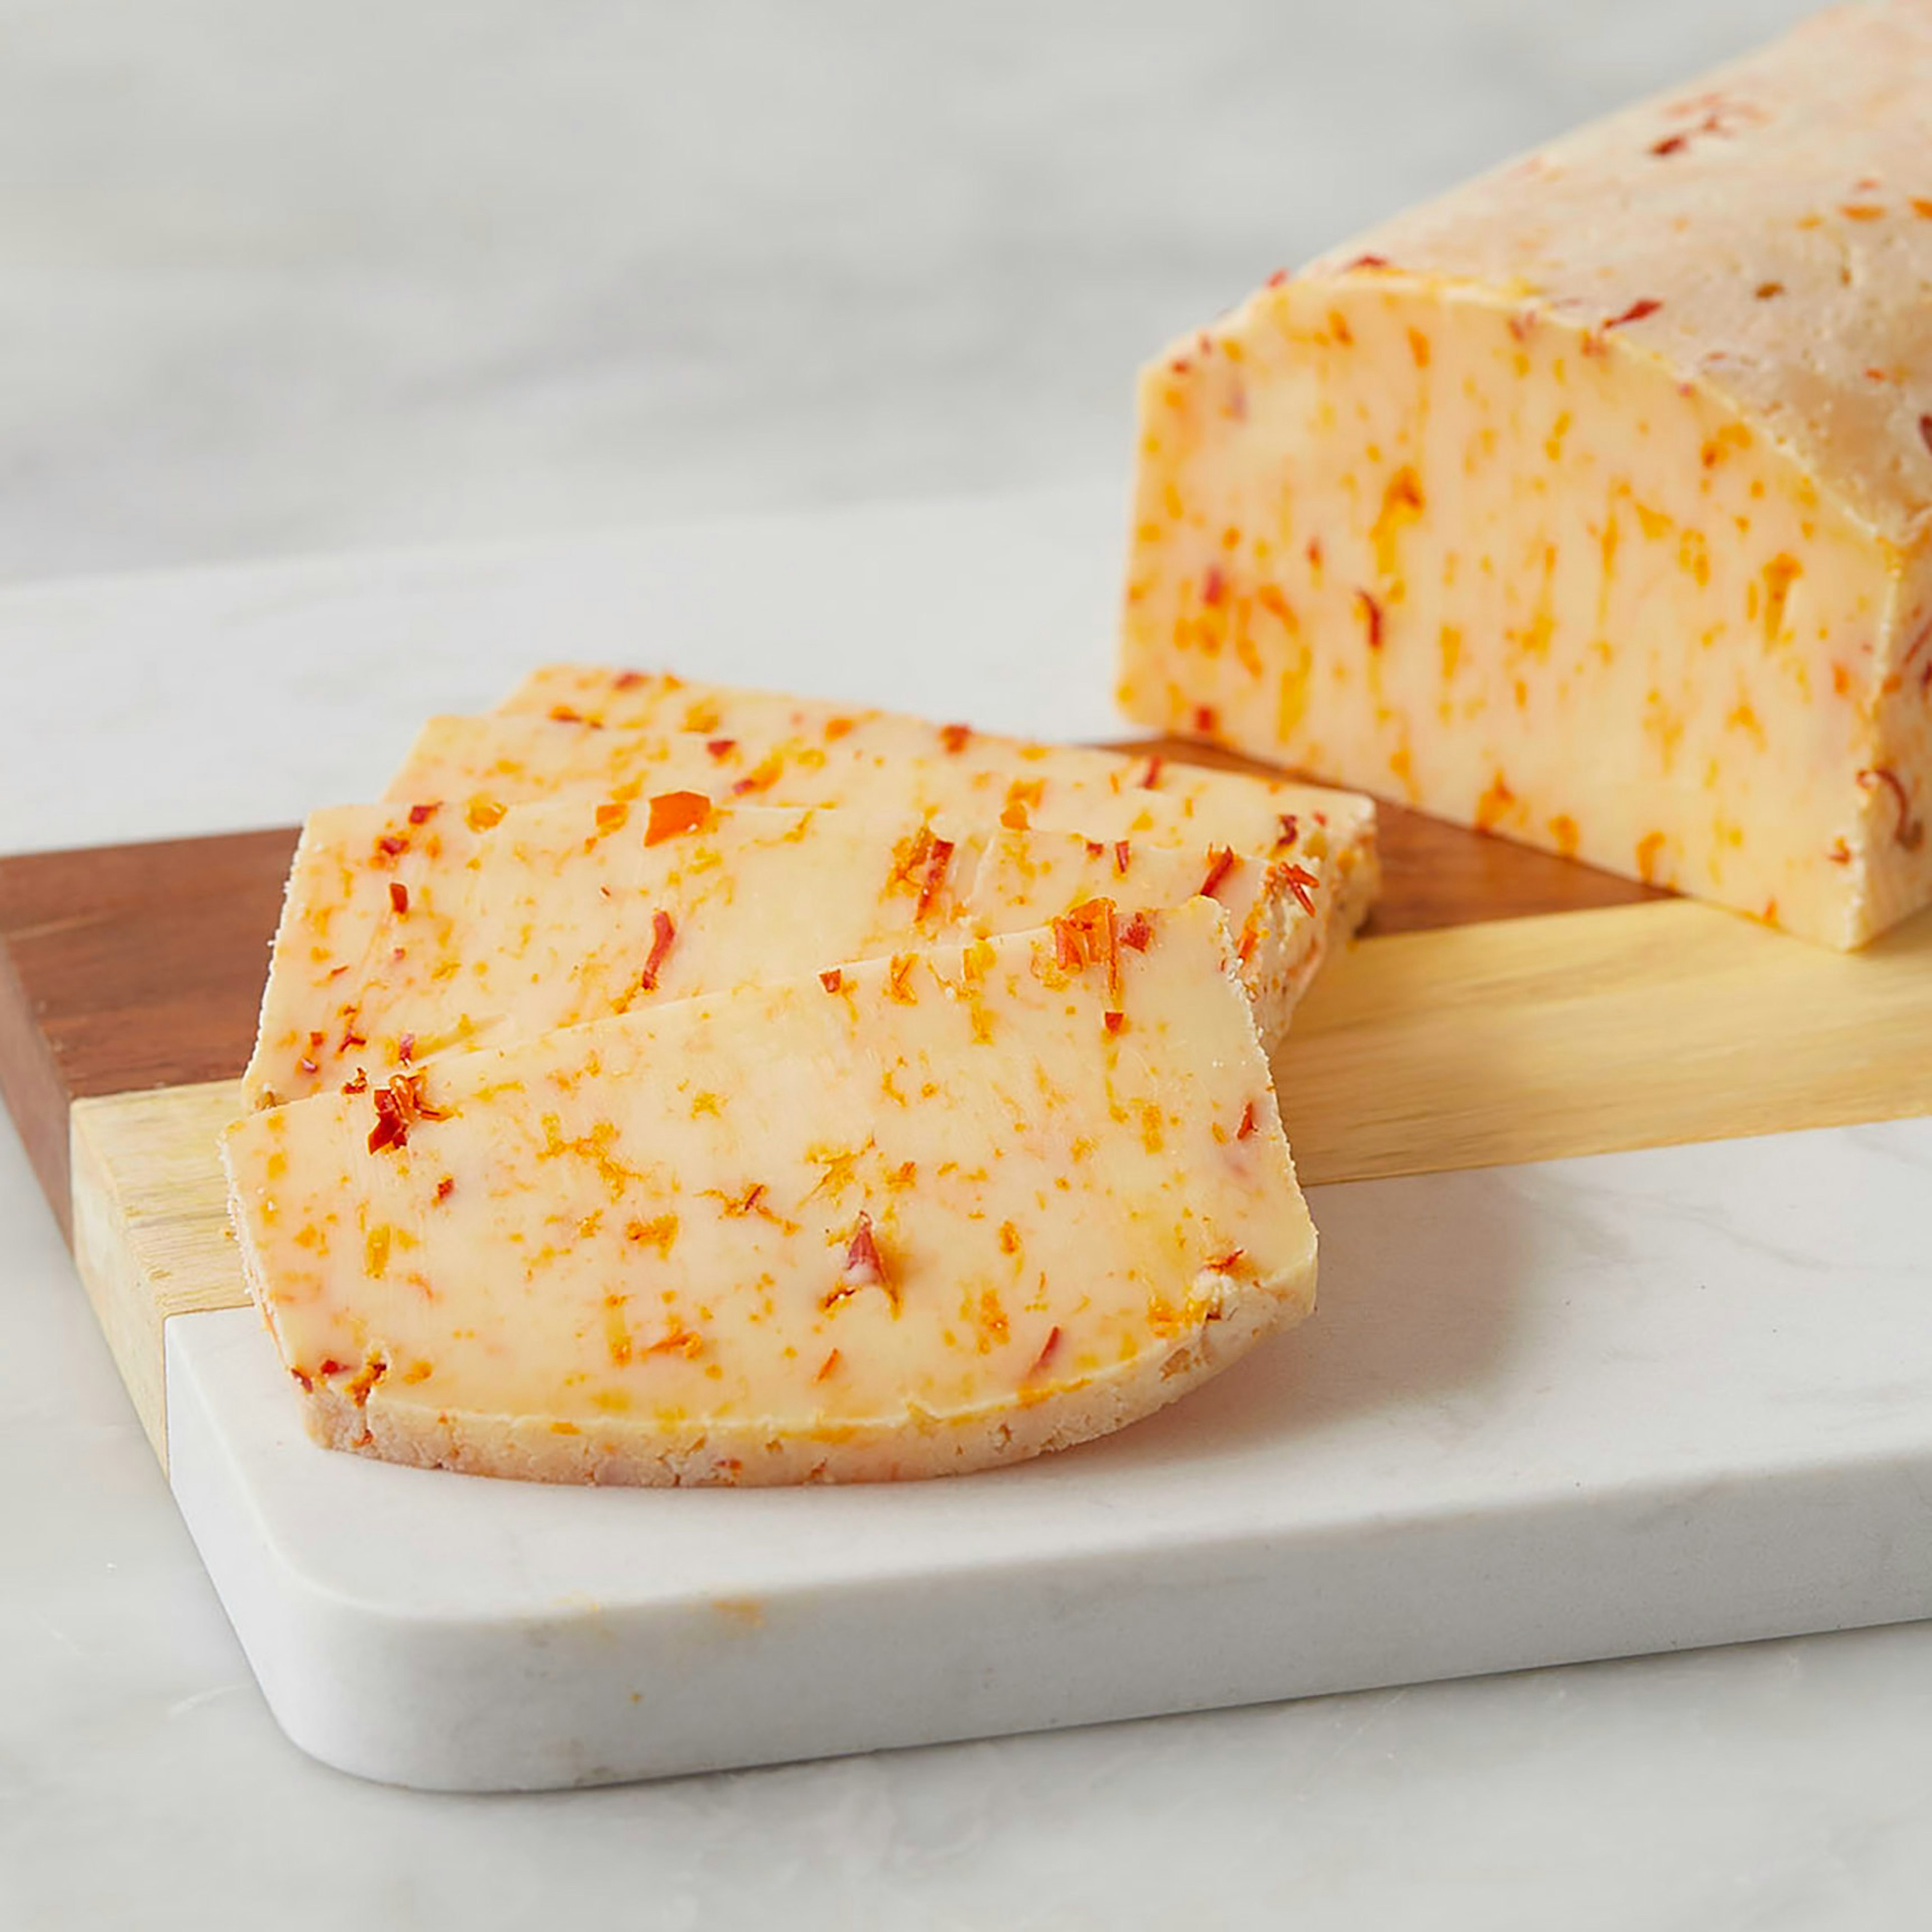 Jumi Chili Raclette cheese